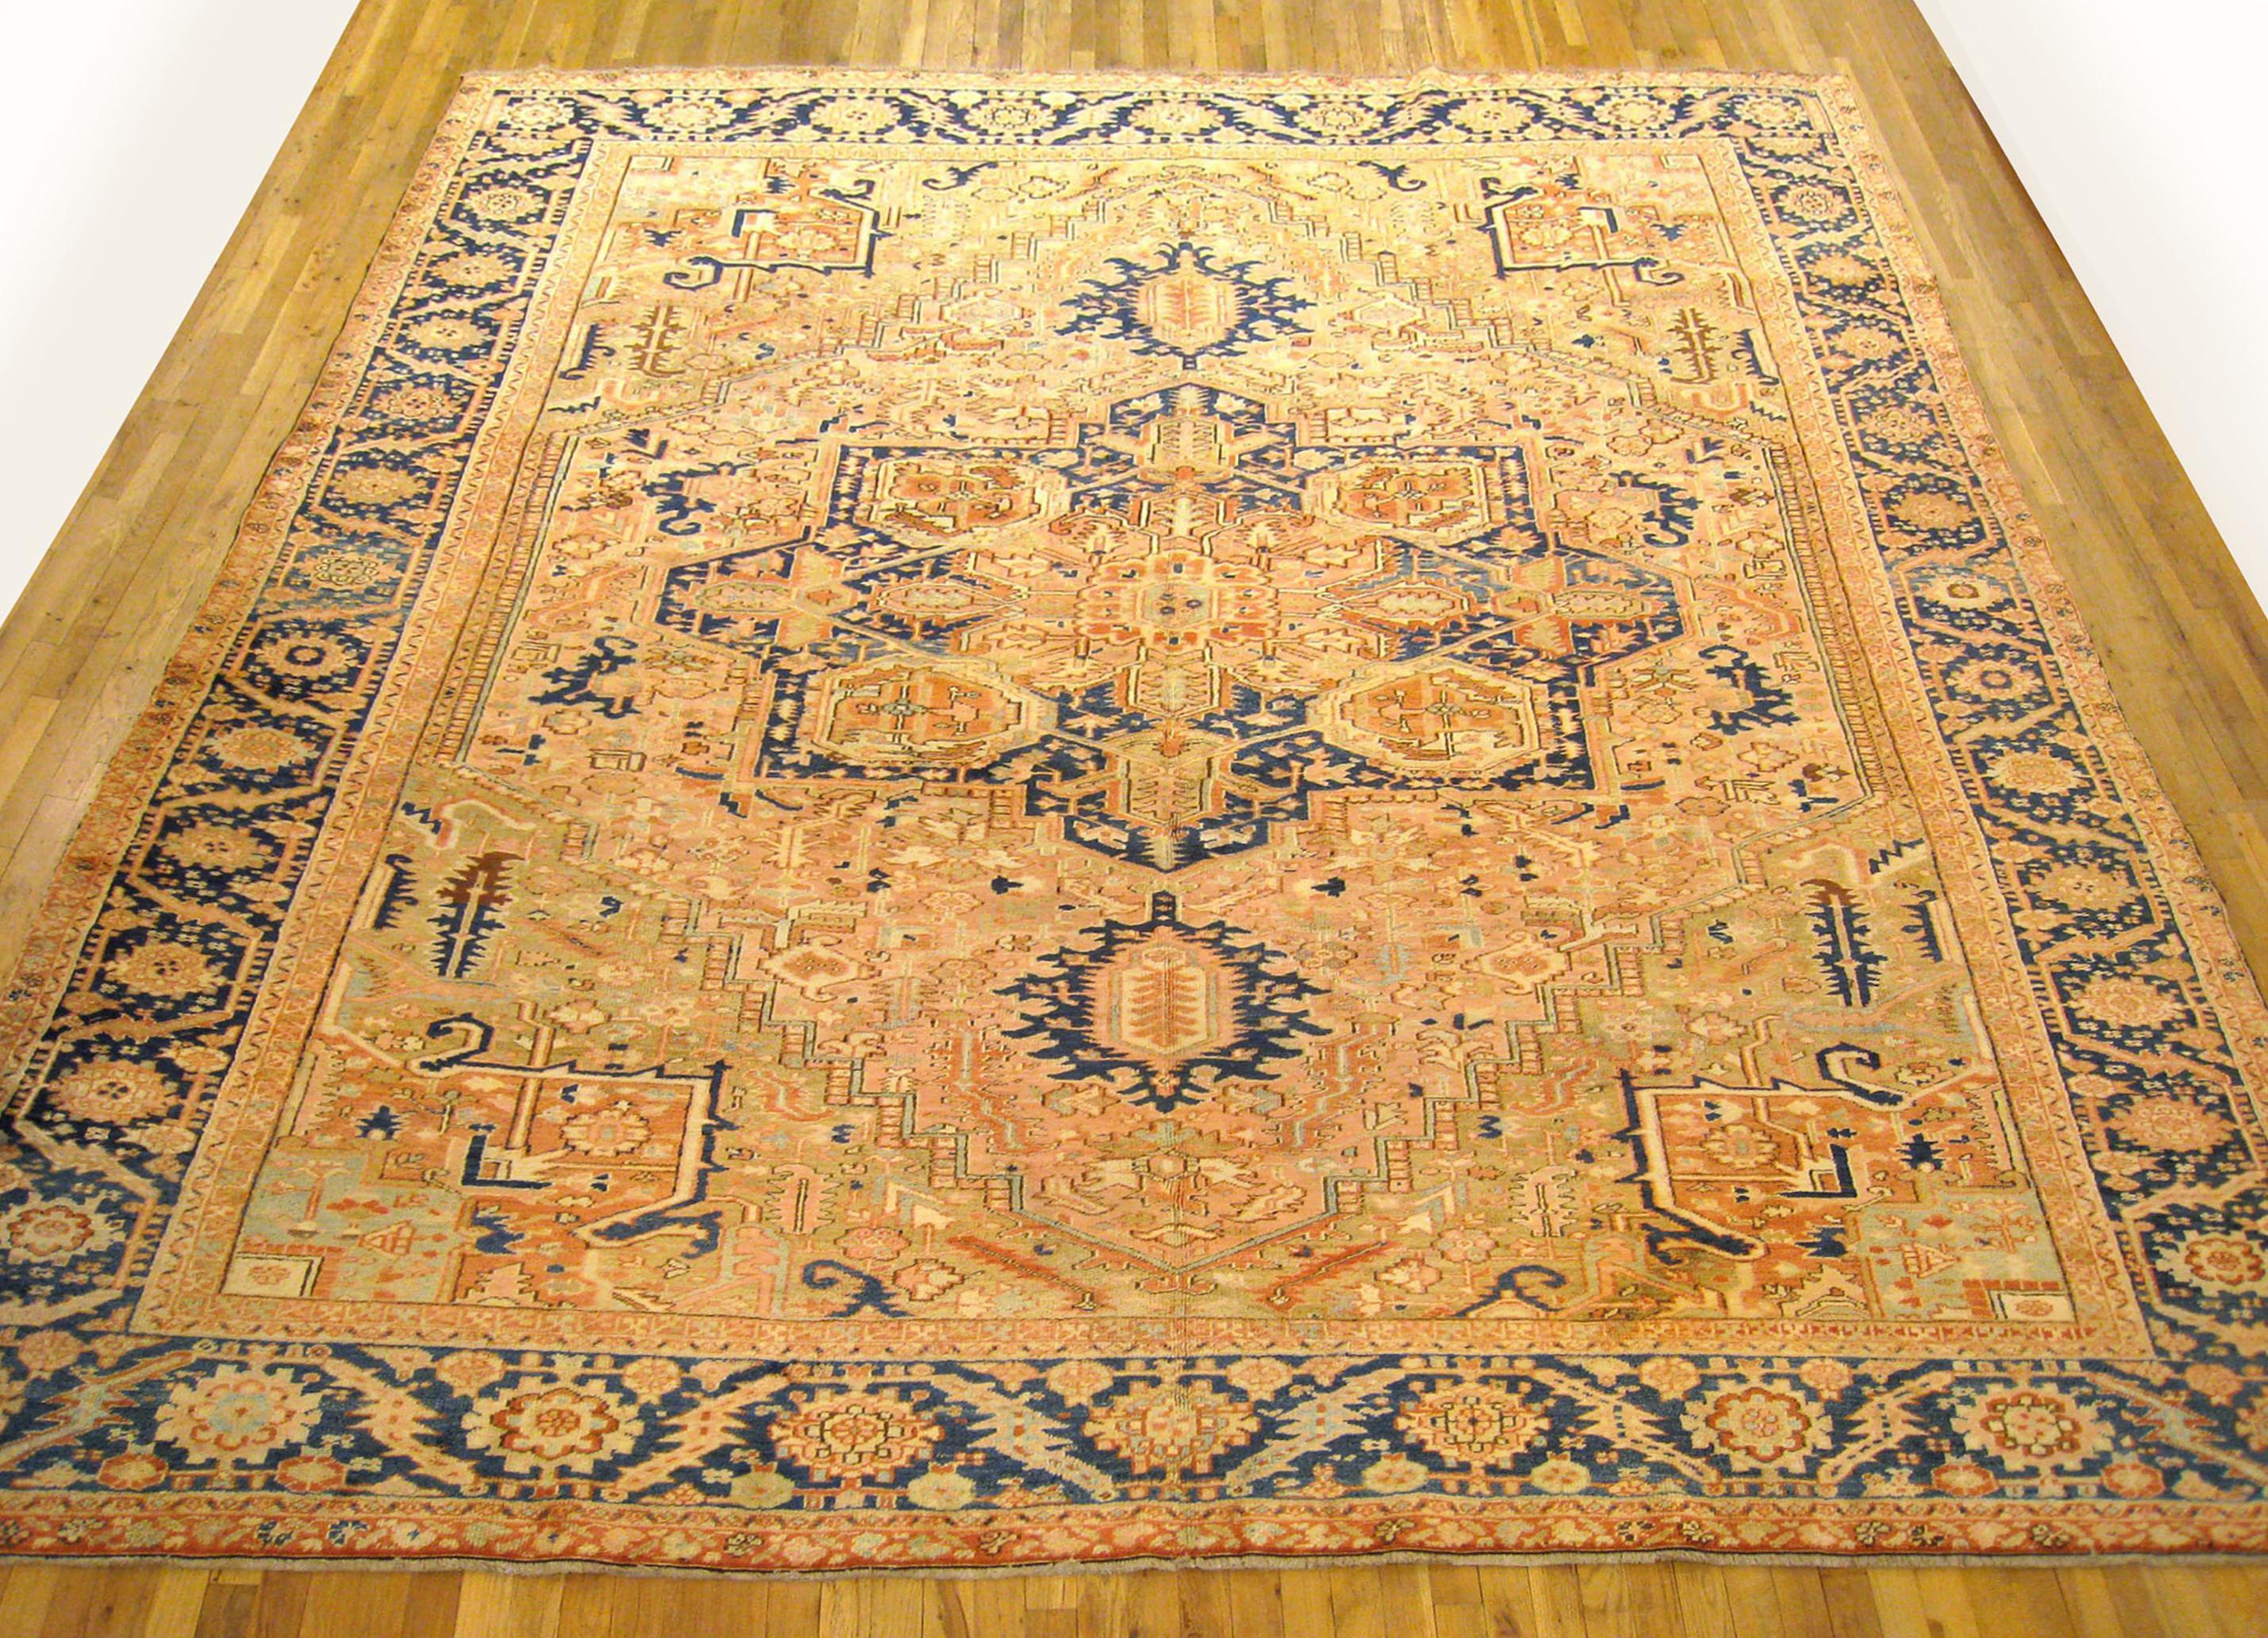 Vintage Persian Heriz oriental rug, large size

A vintage Persian Heriz oriental rug, size 13'6